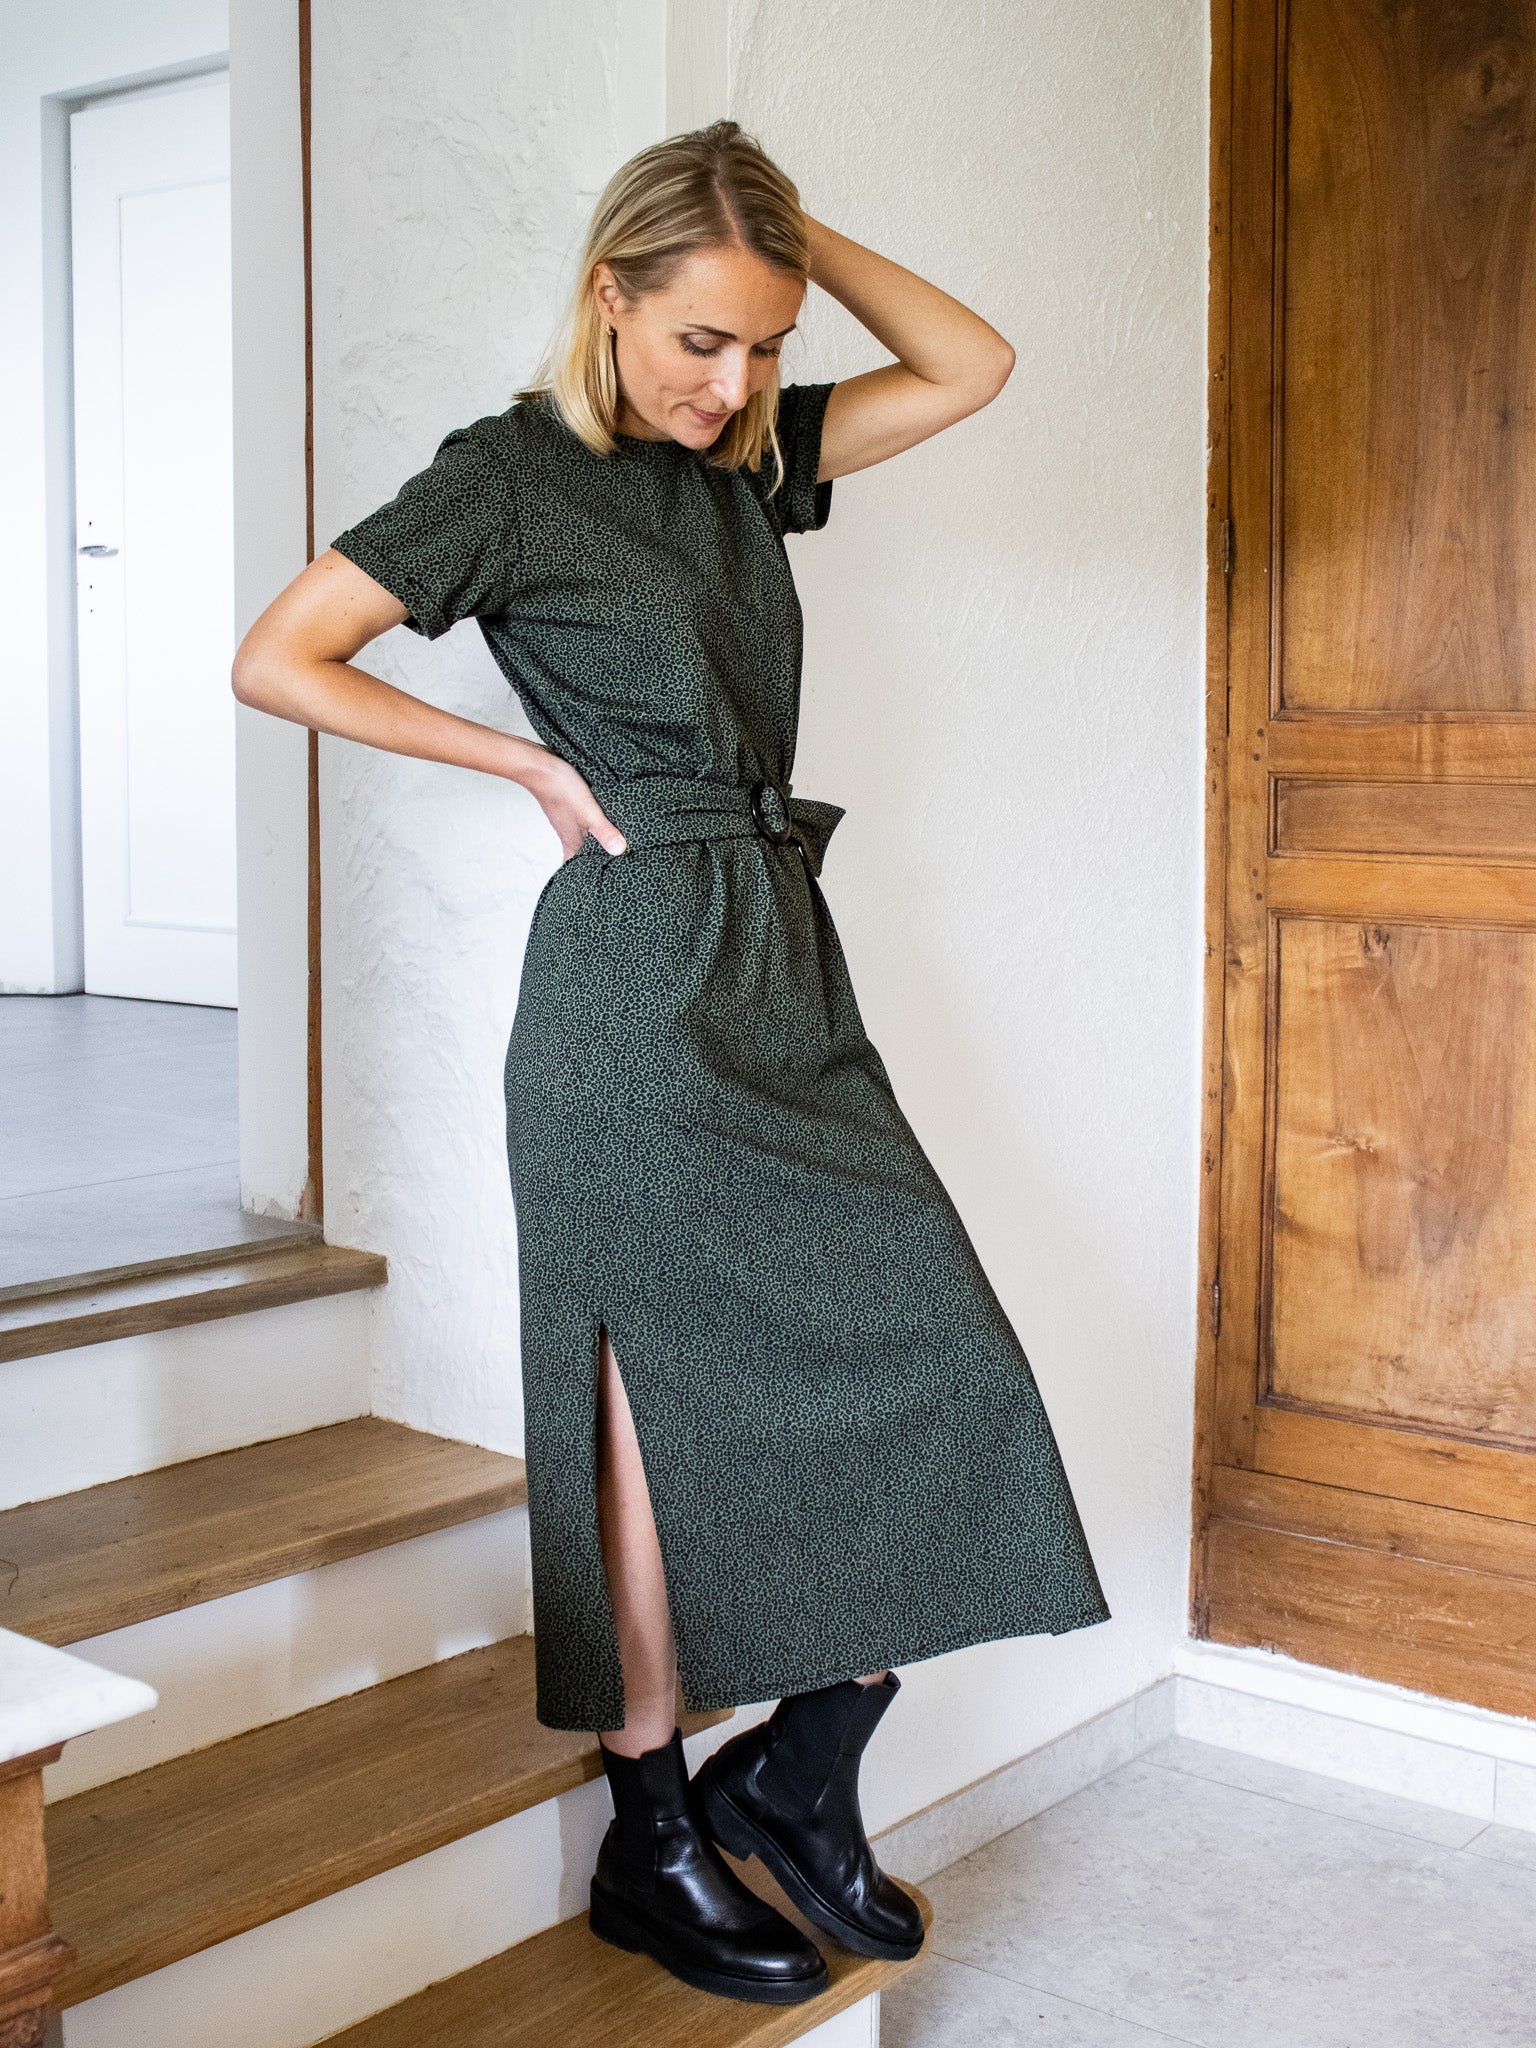 Joli Kit Couture - Robe Michelle léopard kaki - Joli Lab